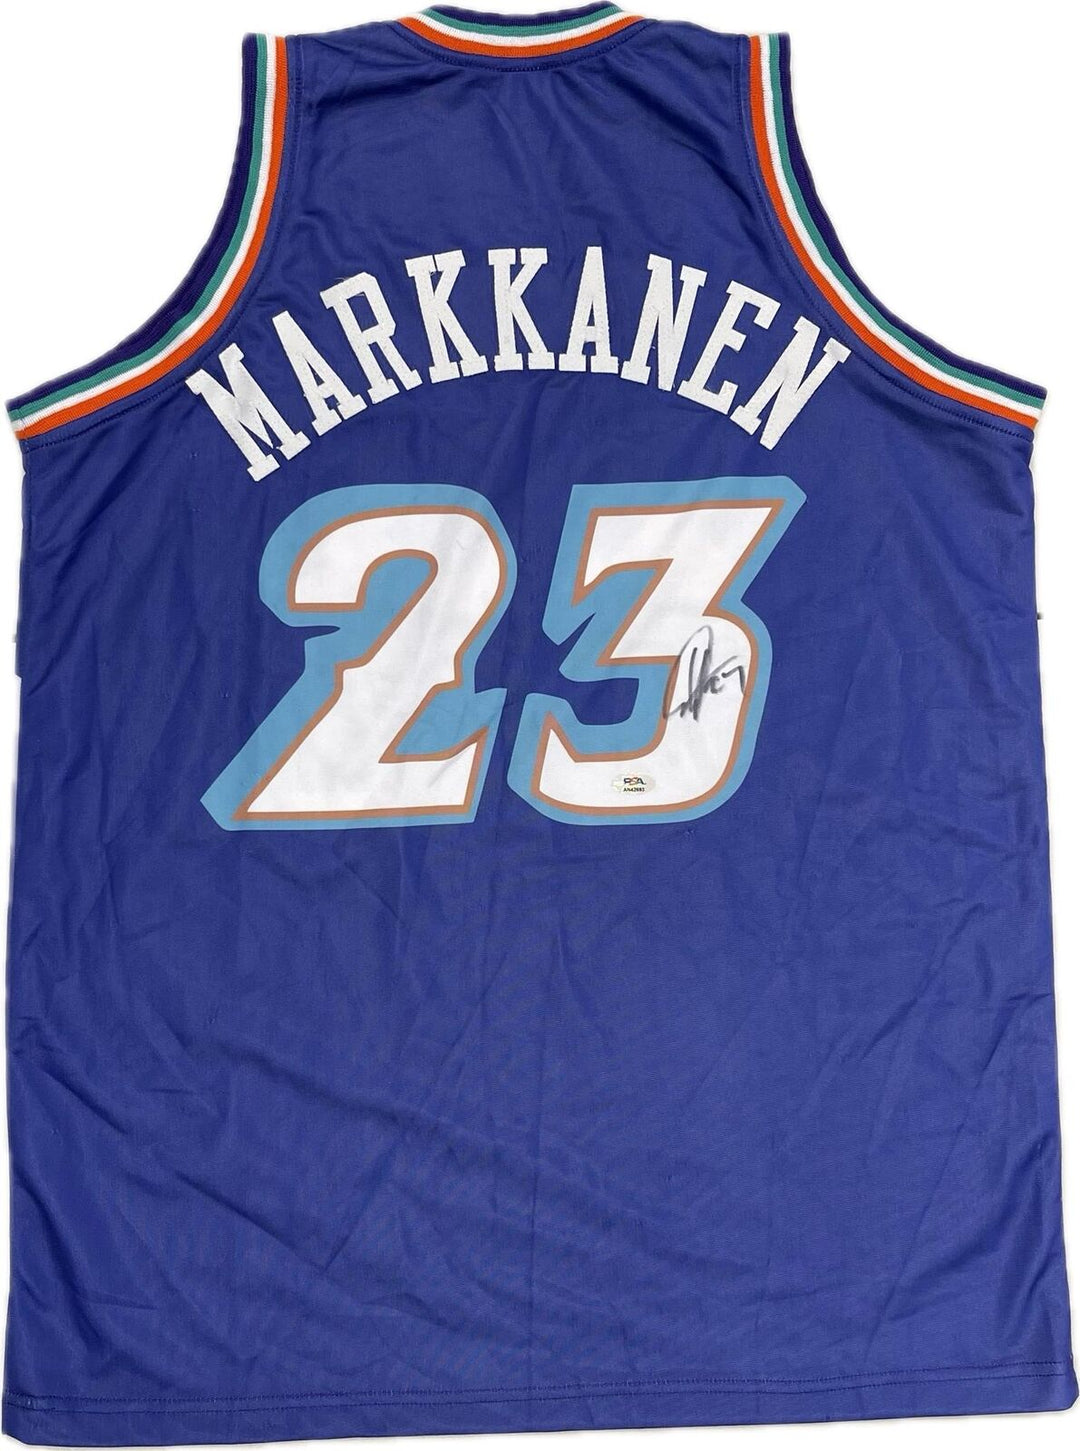 Lauri Markkanen signed jersey PSA/DNA Utah Jazz Autographed Image 1